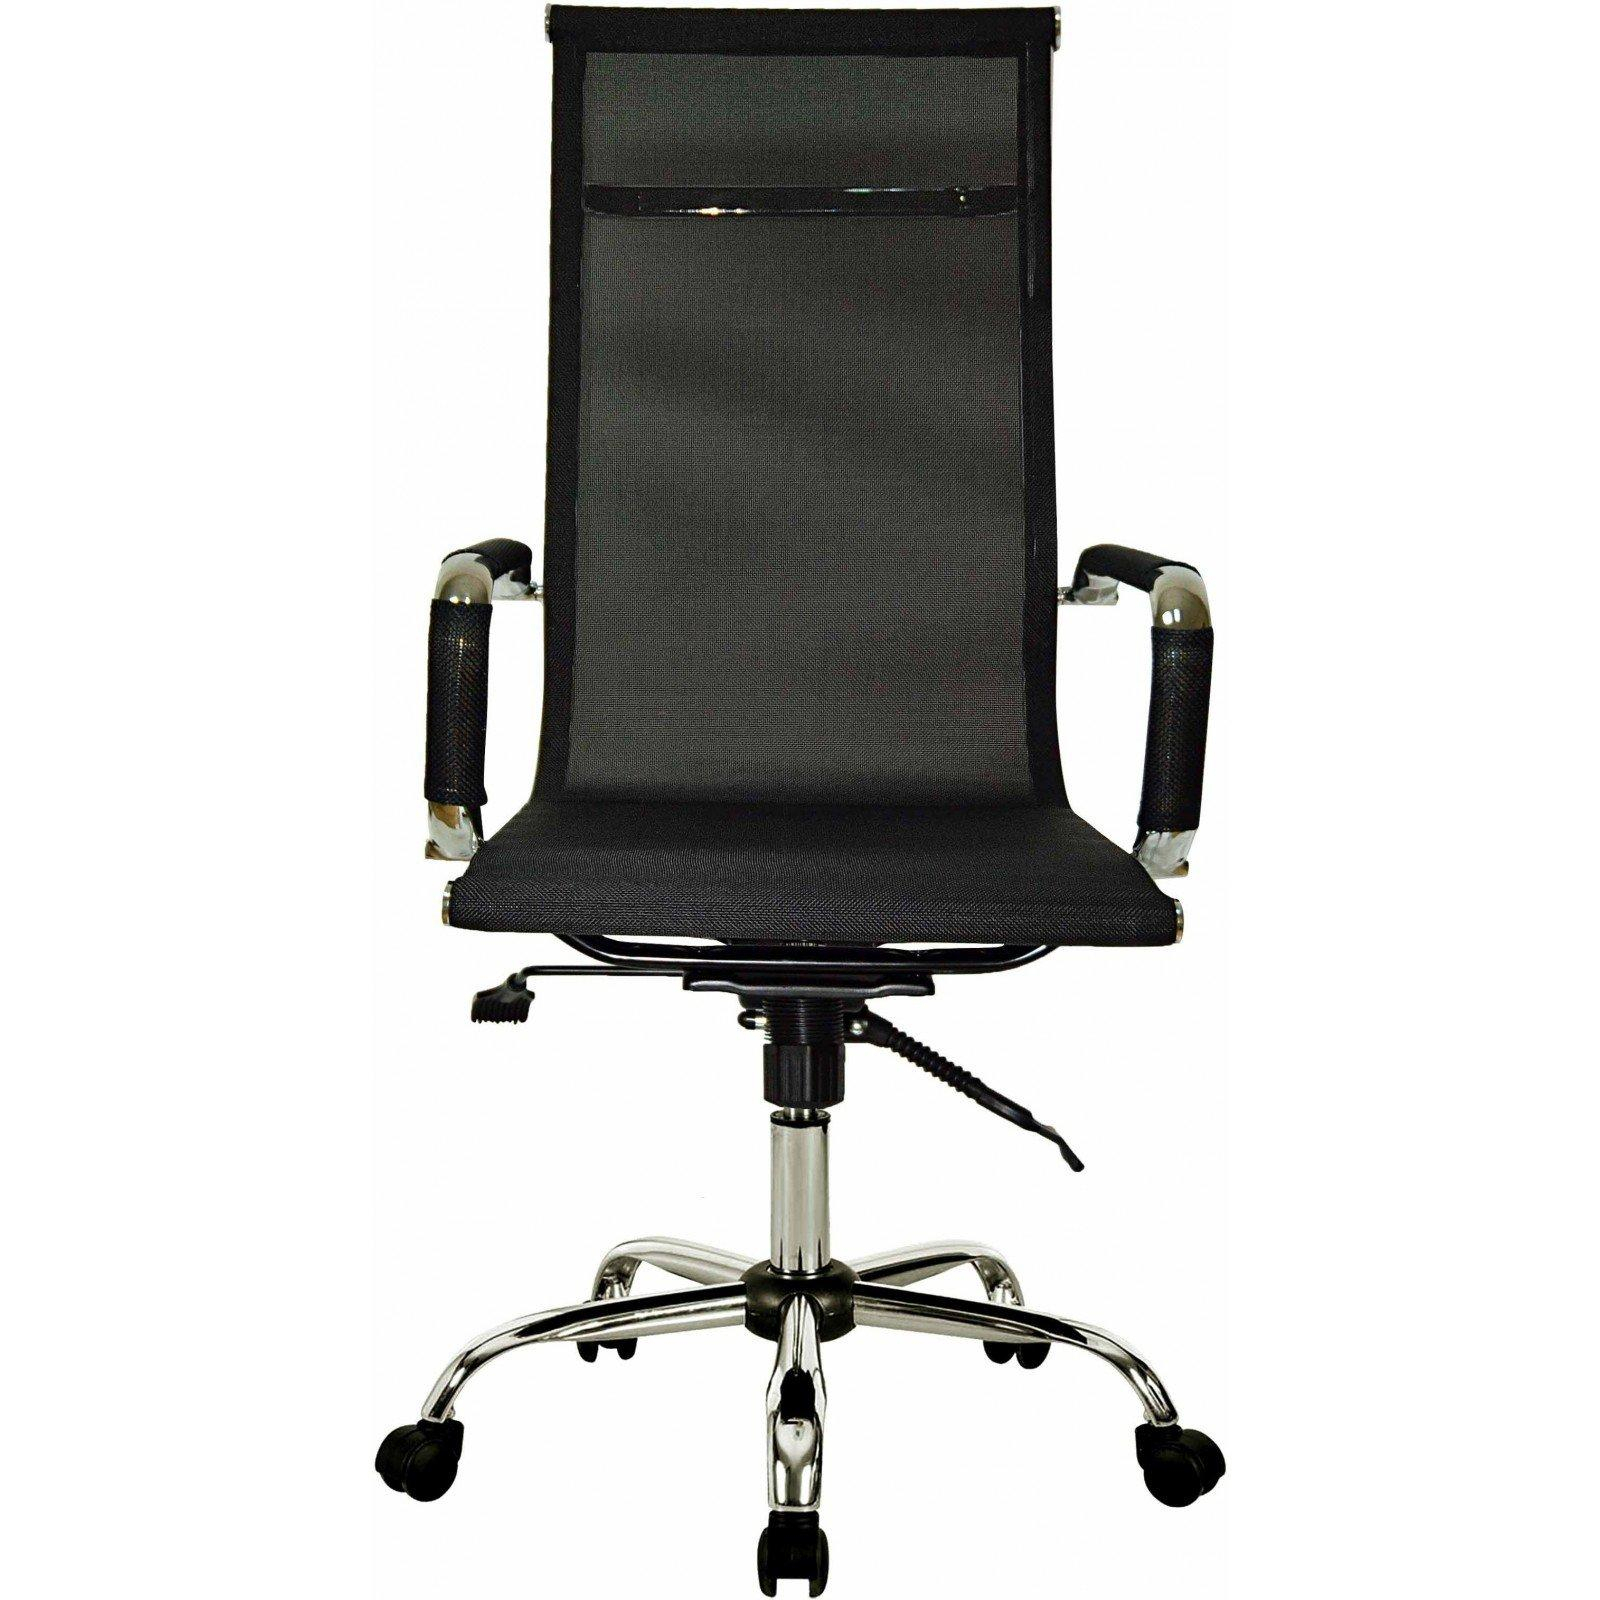 Офисное кресло Примтекс плюс Lite Chrome MF DM-01 Black (Lite chrome MF DM-01) изображение 2